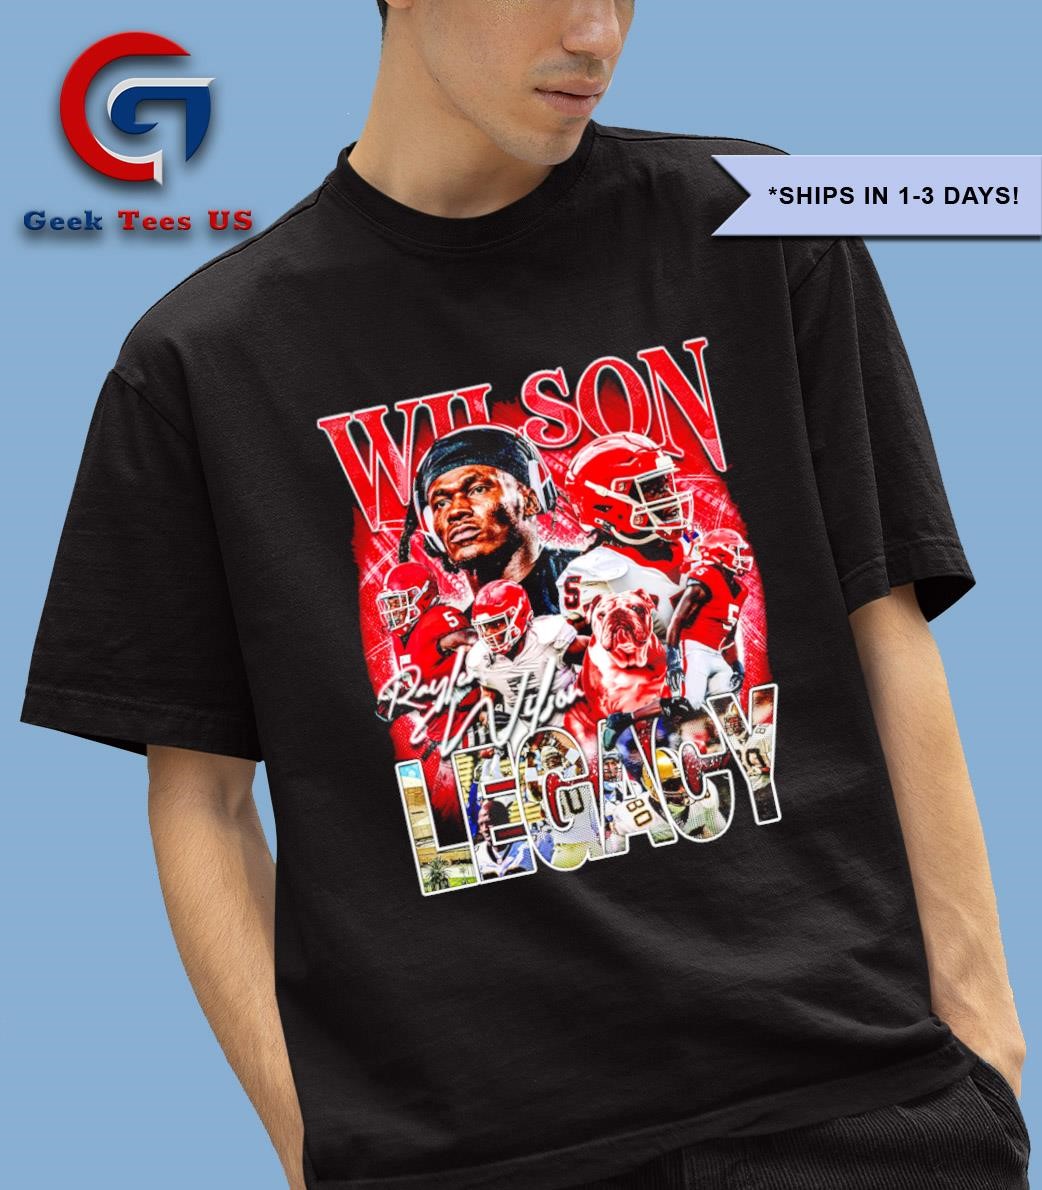 Raylen Wilson 5 Legacy Georgia Bulldogs football graphic shirt
Buy this shirt:  geekteesus.com/product/raylen…
#shirt #trending #gift #geekteesus #geekshirt #RaylenWilson #GeorgiaBulldogs #football #GoDawgs #GDay #GoDawgs